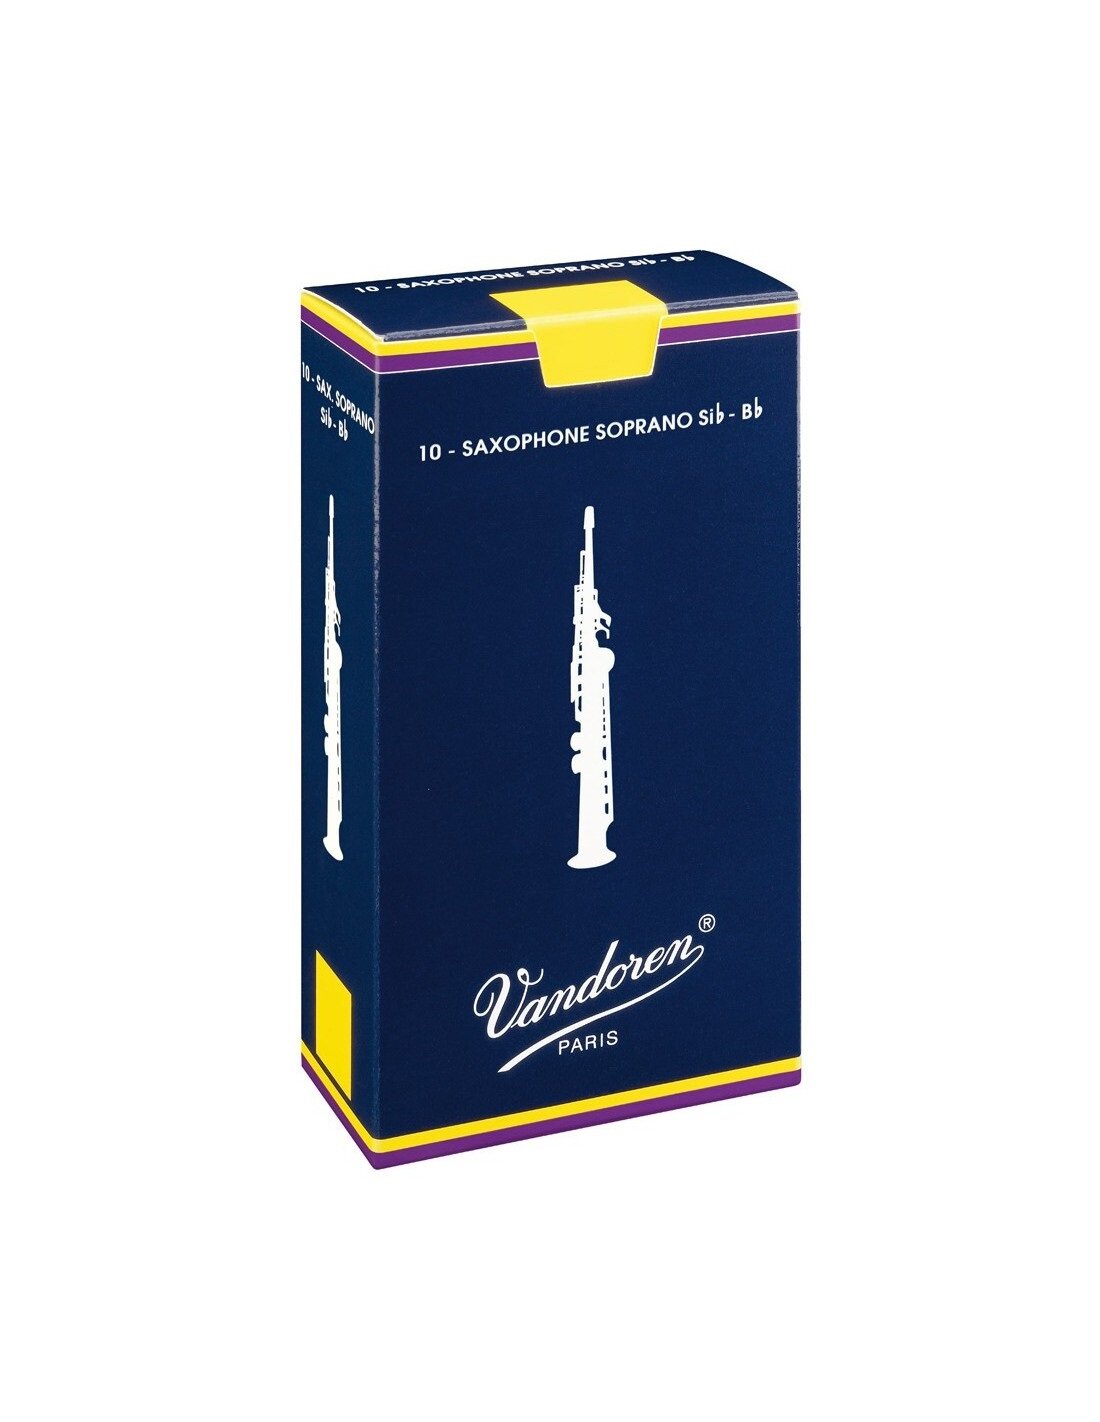 Vandoren Classic Saxophone Soprano Sib Force 1 x10 : photo 1